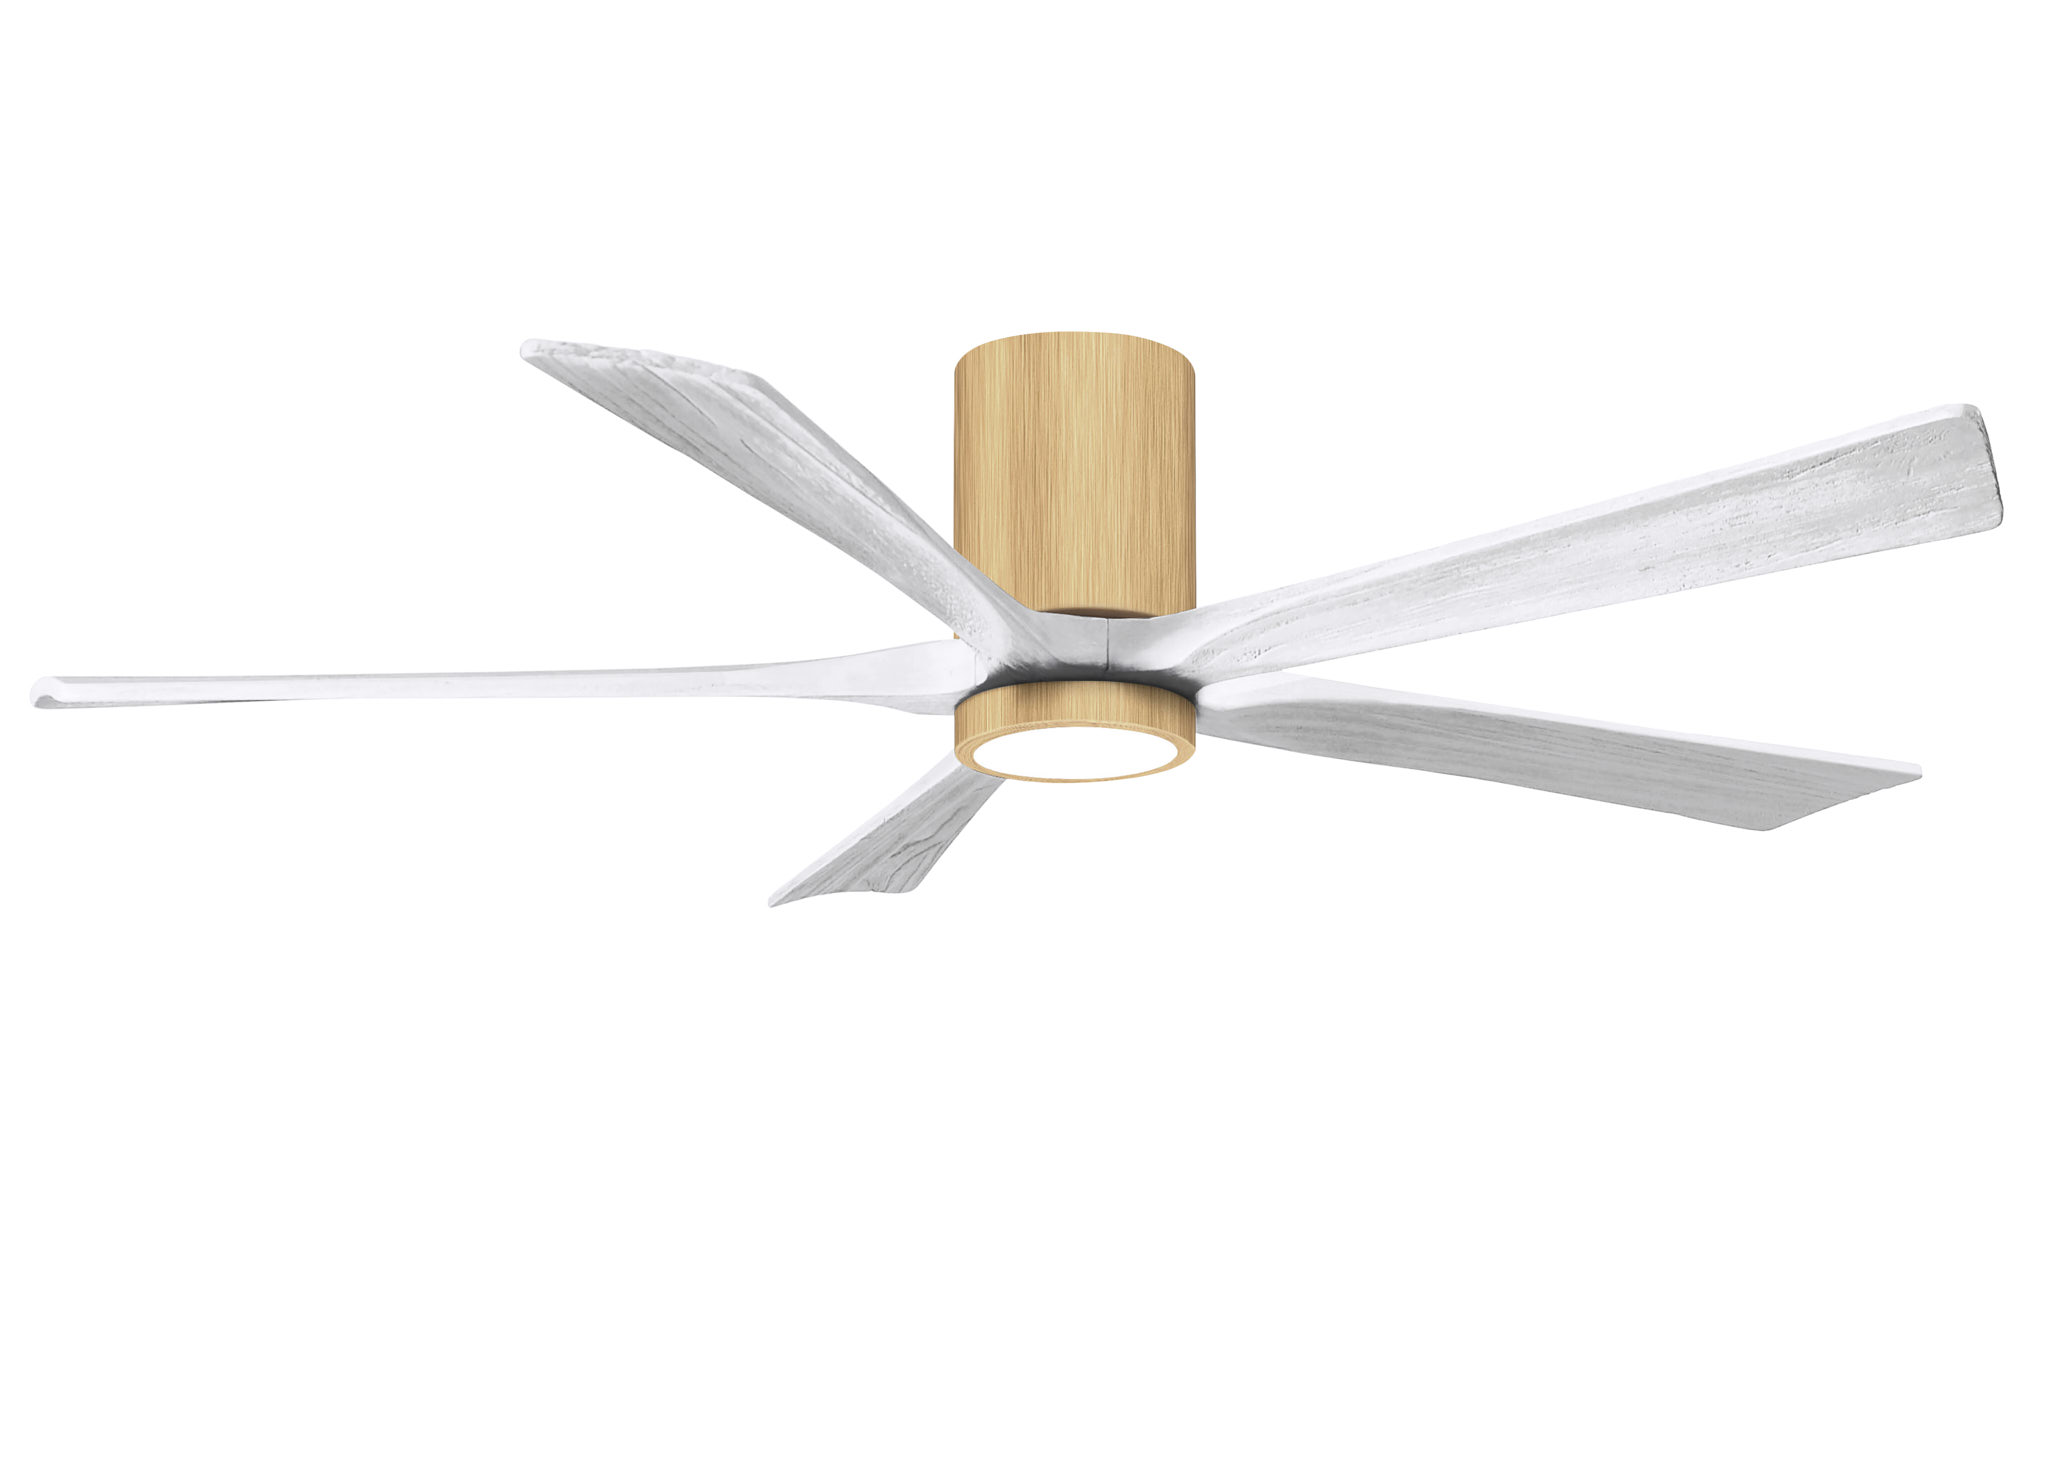 Irene-5HLK 6-speed ceiling fan in light maple finish with 60